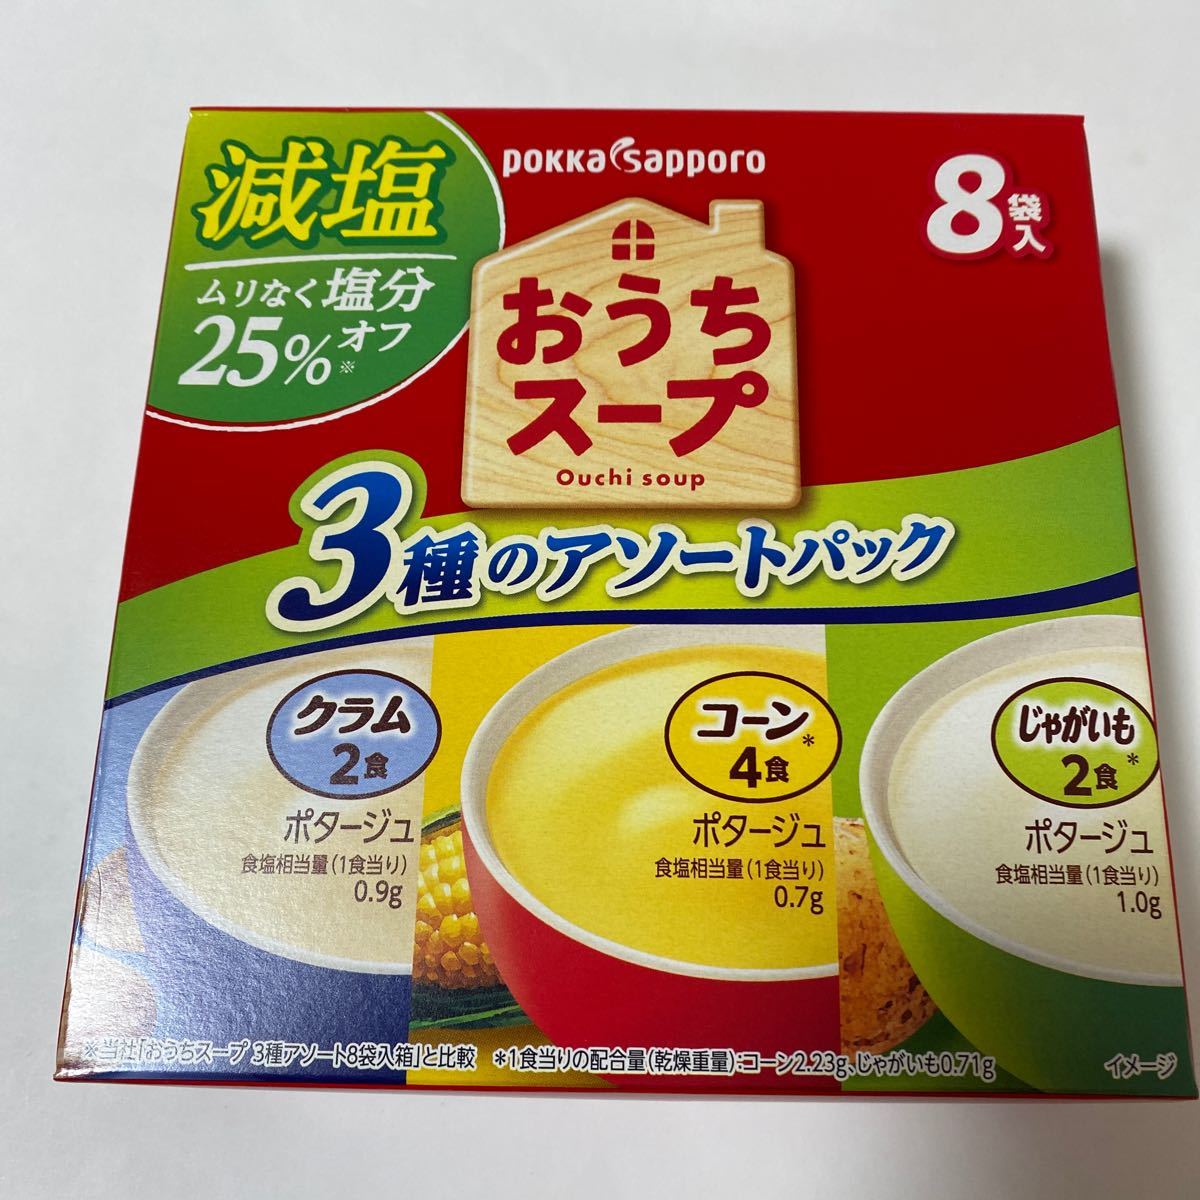 Pokka Sapporo Food &amp; Beverage Doup Soup Soups Cremed Salt 3 типа ассортимент 8 мешков вступил в 2025.03